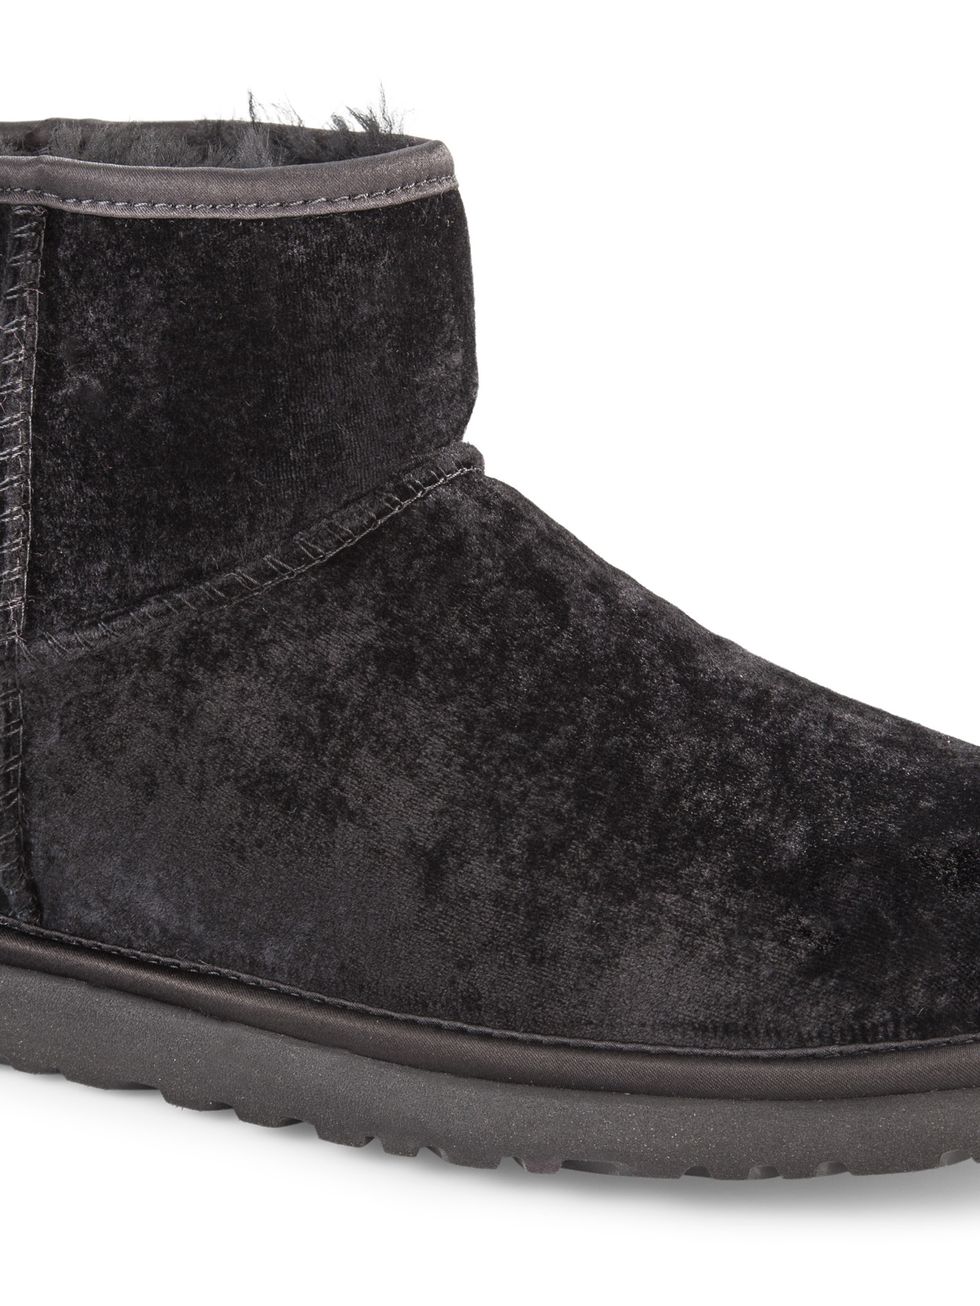 Footwear, Brown, Boot, Shoe, Fashion, Black, Tan, Beige, Leather, Snow boot, 